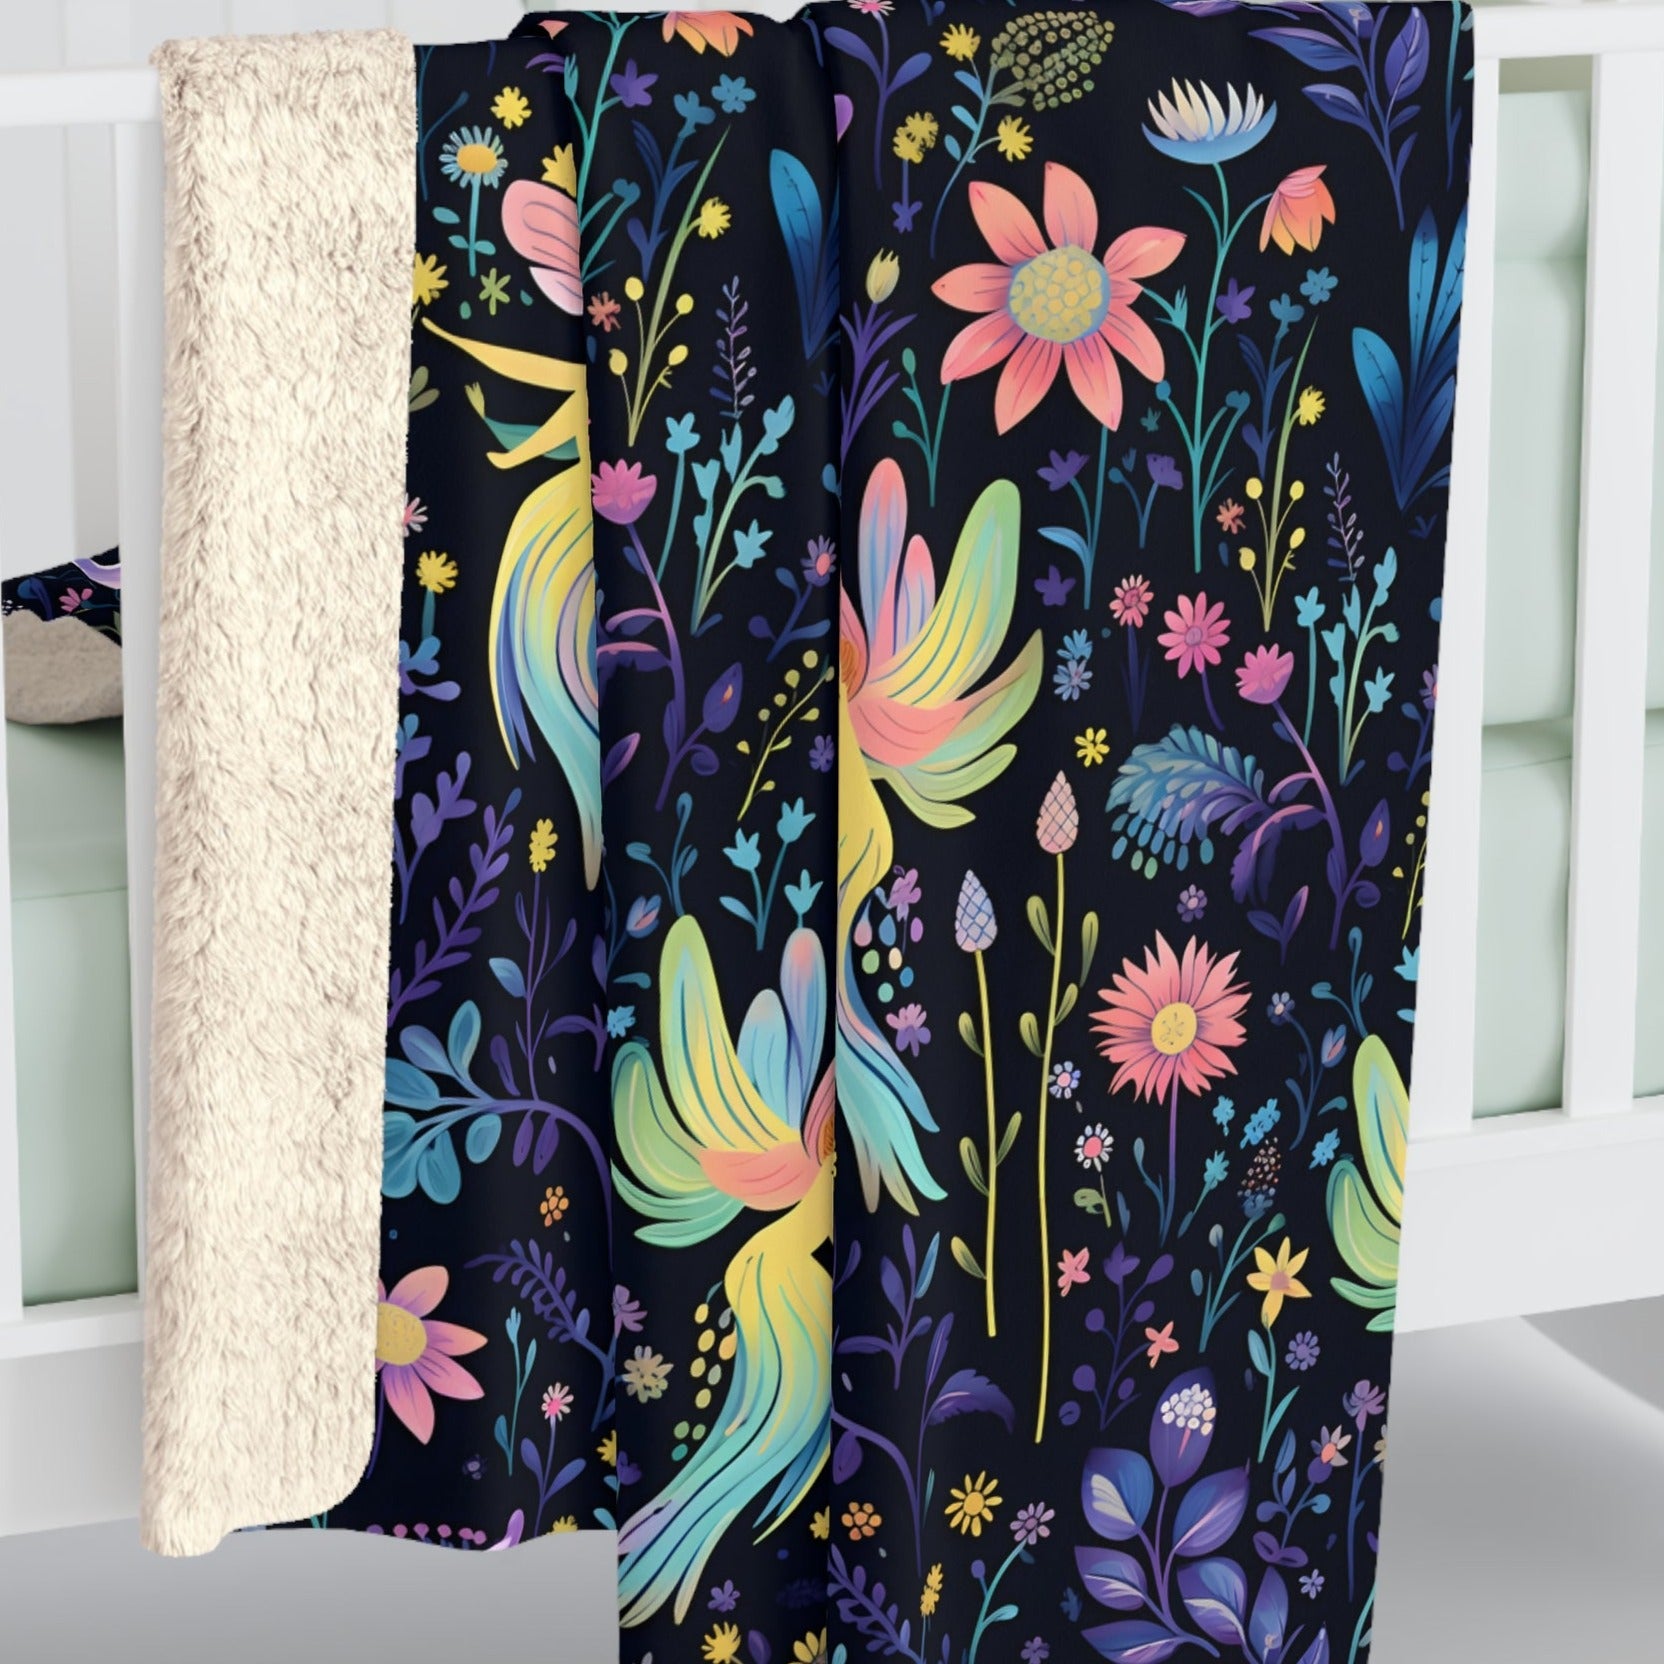 Glowing Garden Fairies Dark Floral Pattern Blanket: Velveteen or Sherpa